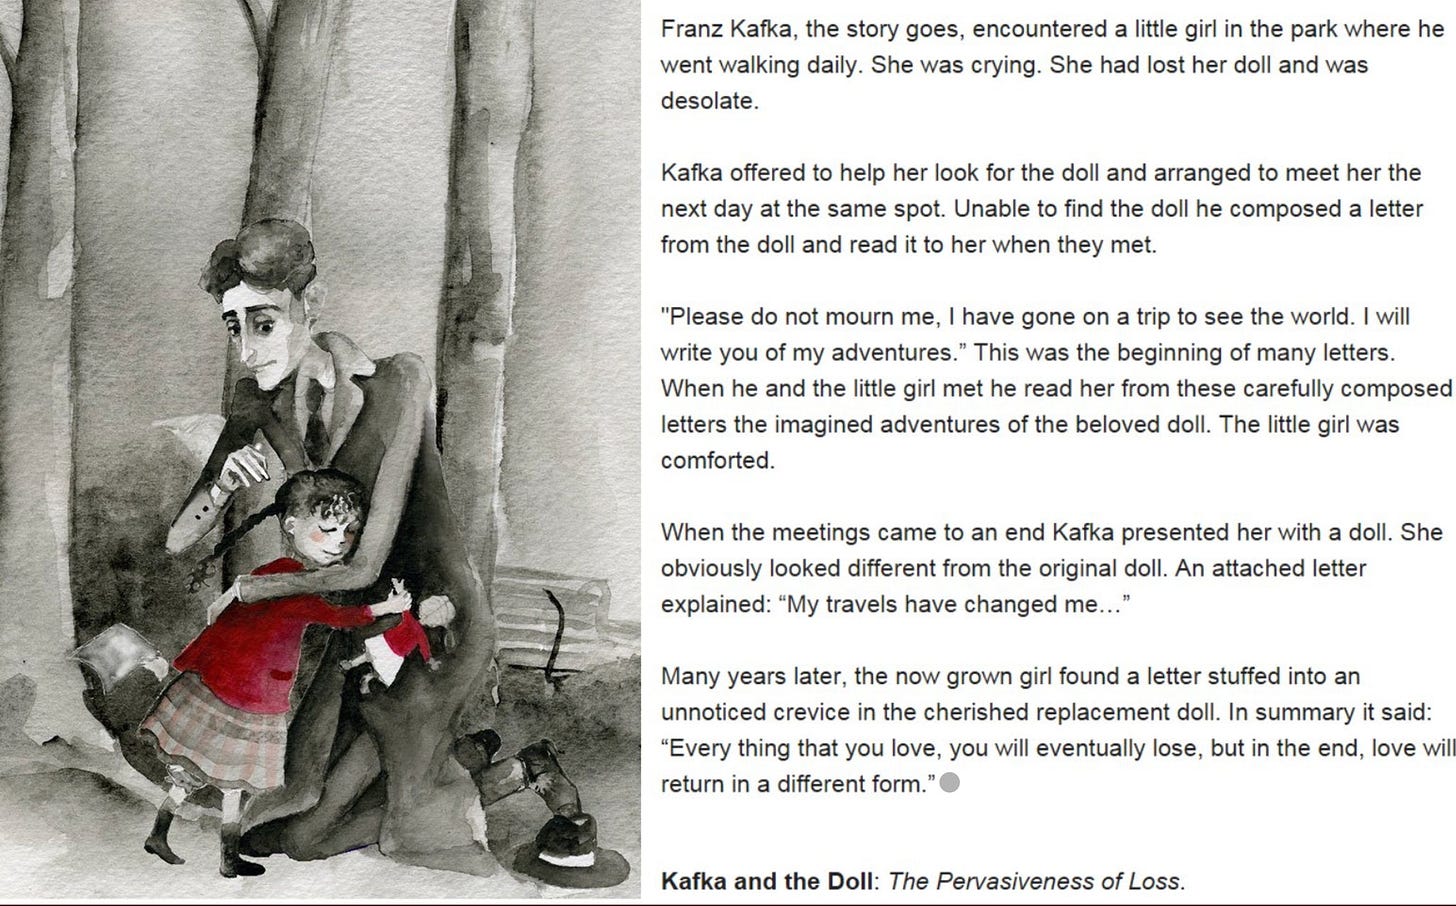 Kafka and the doll